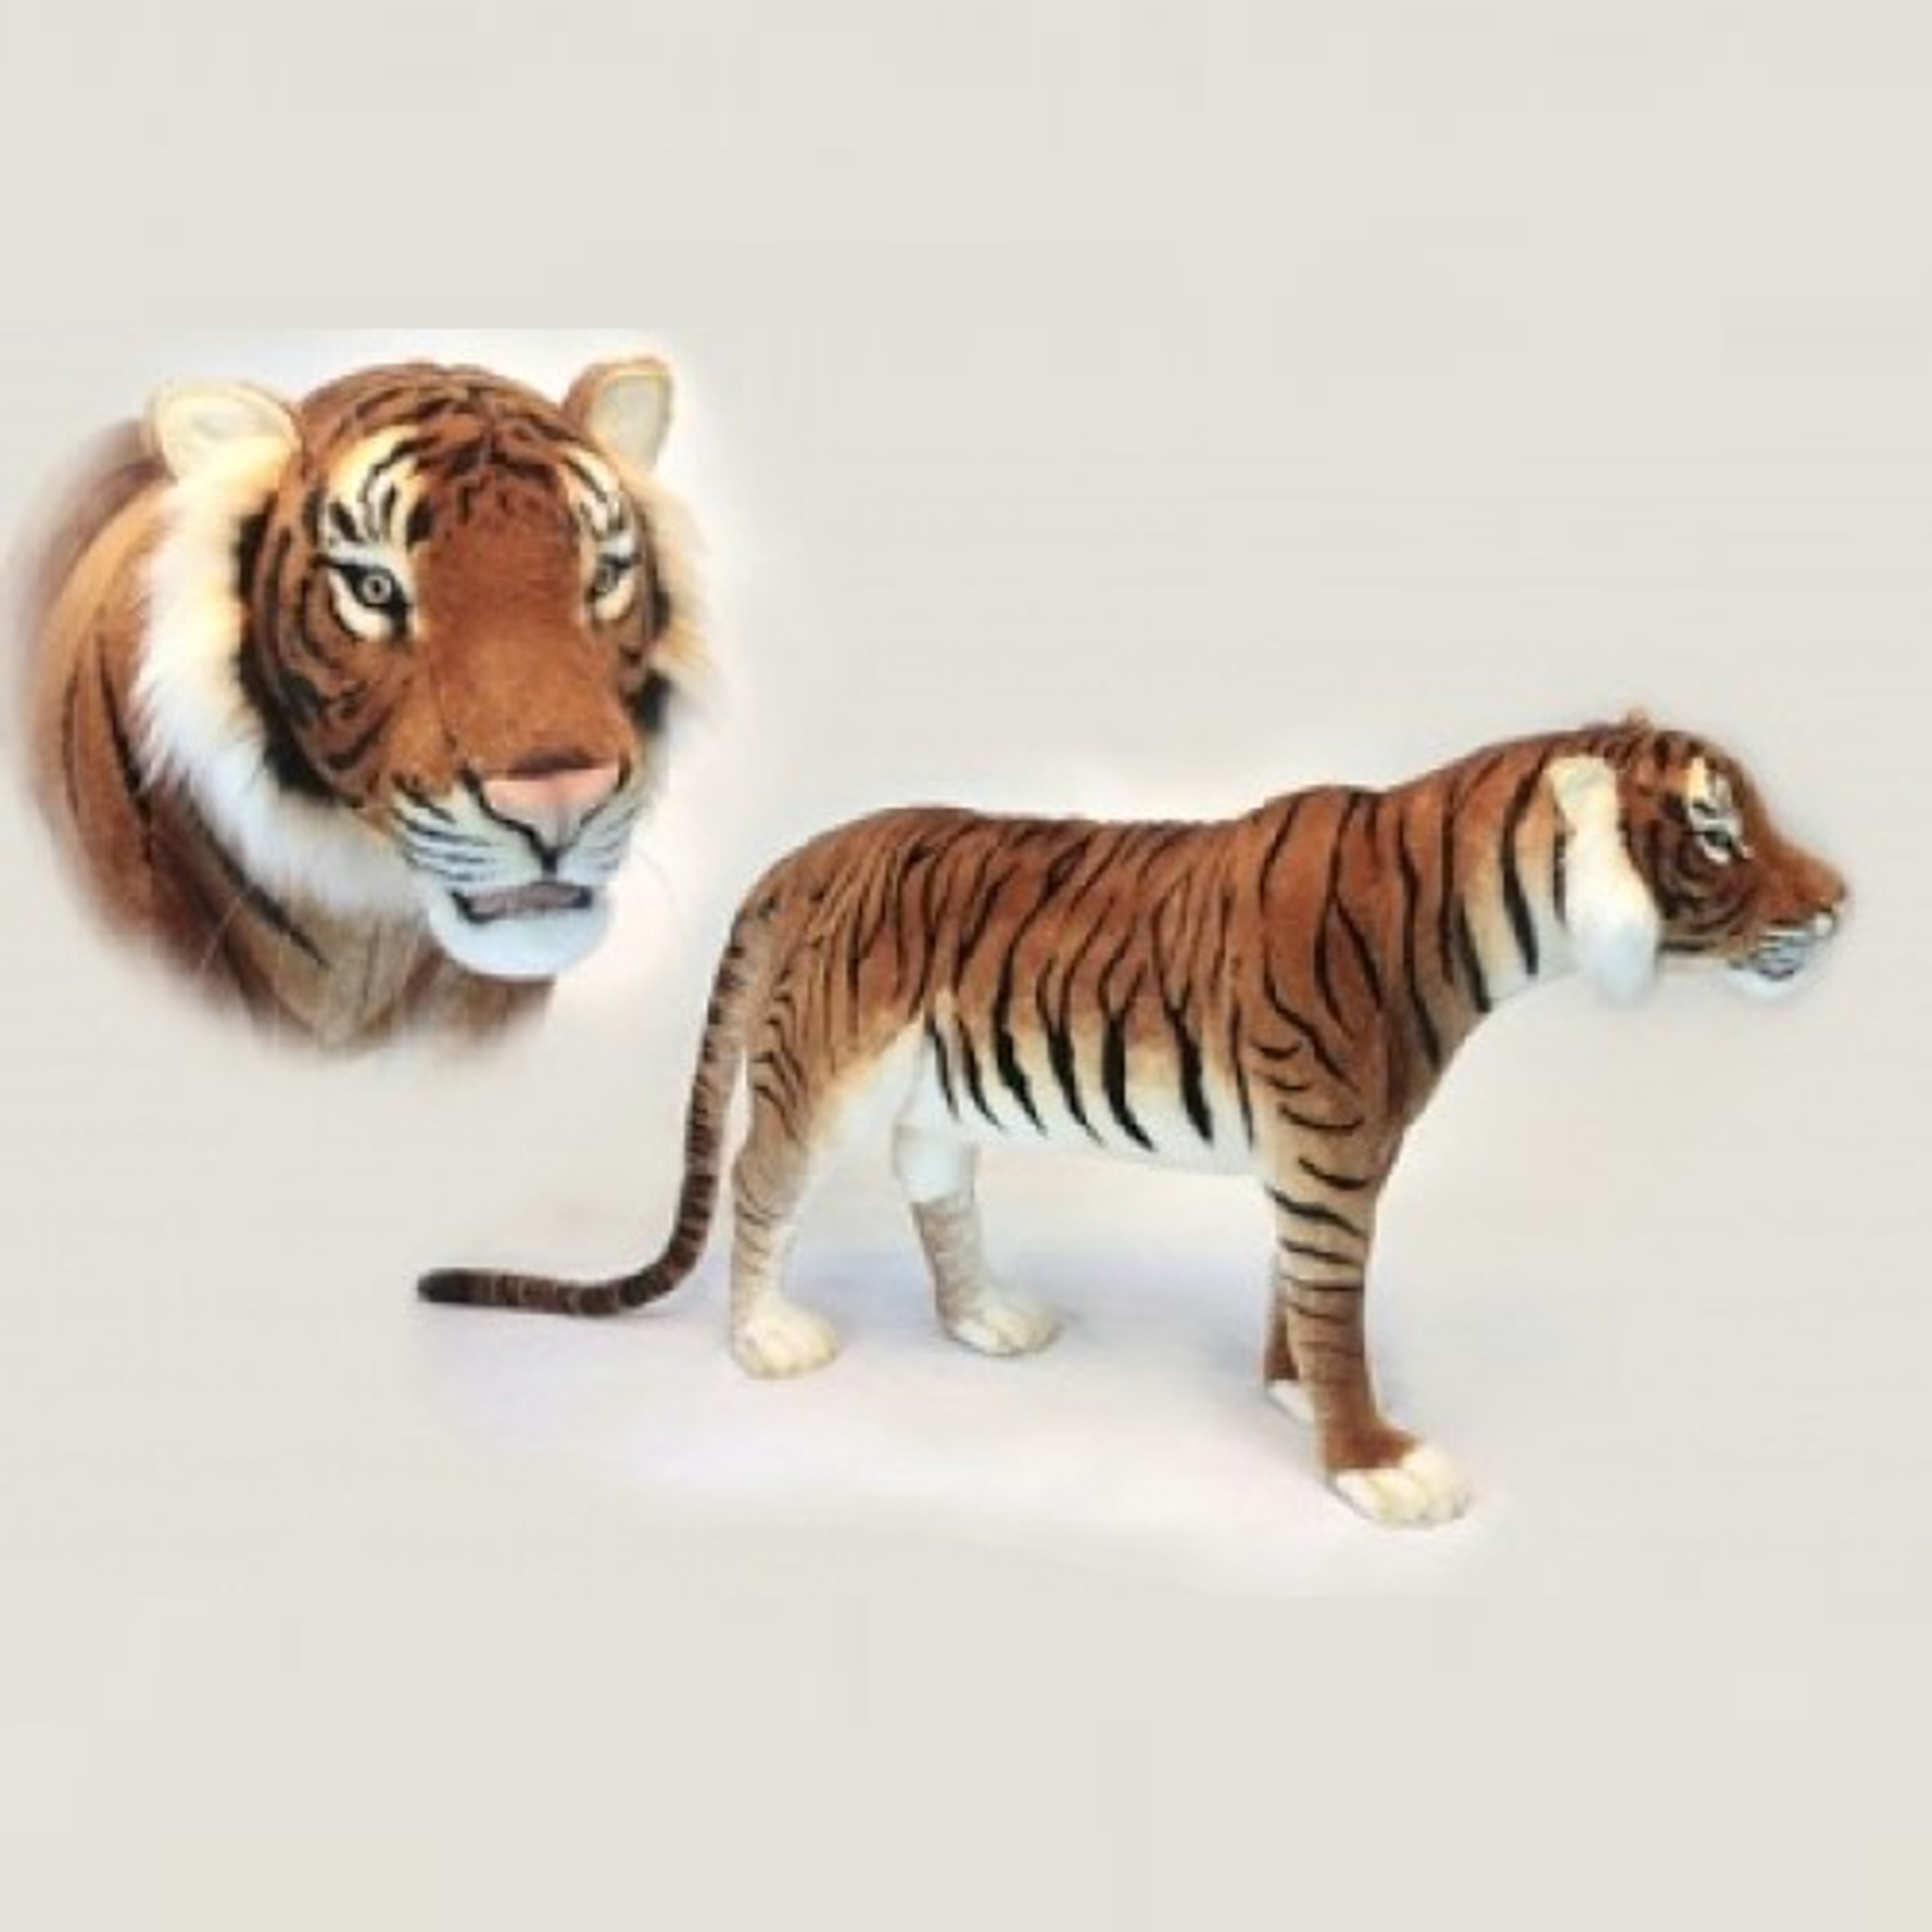 plush tiger stuffed animal